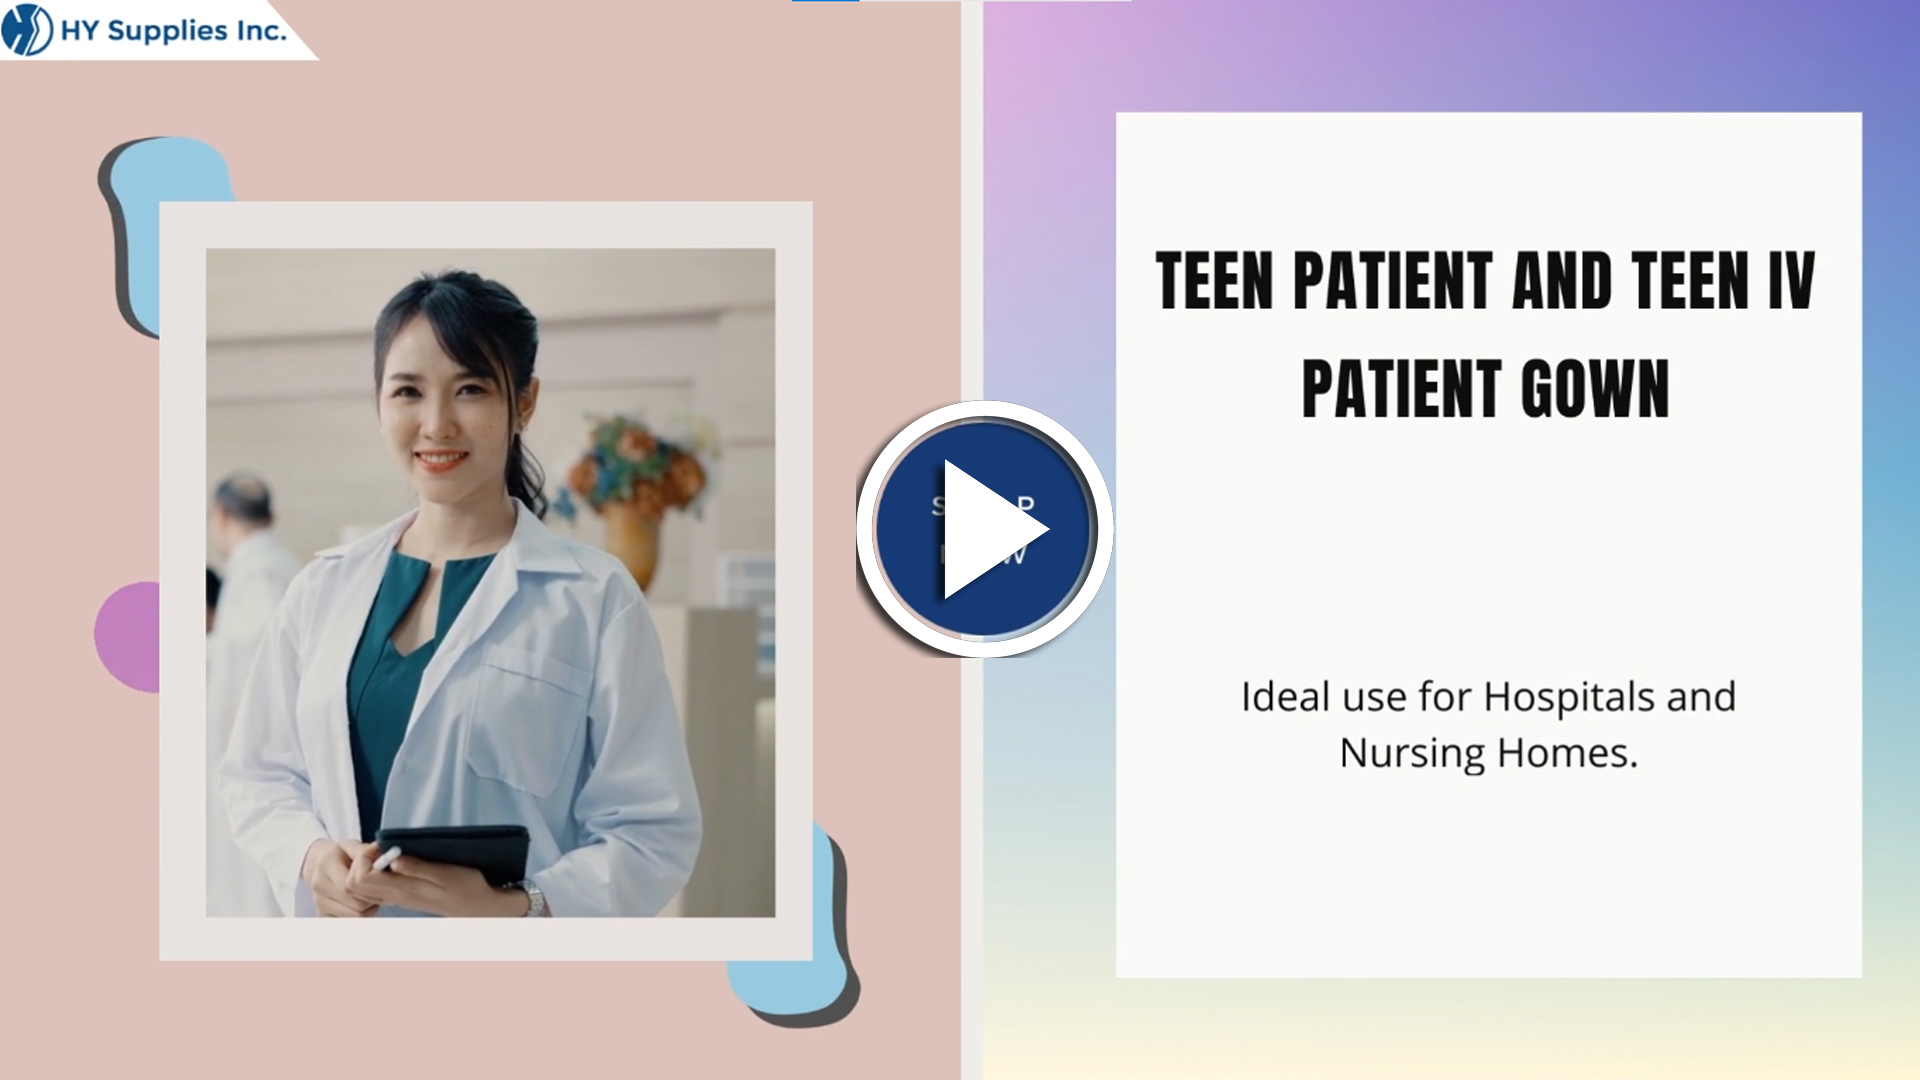 Teen Patient and Teen IV Patient Gown